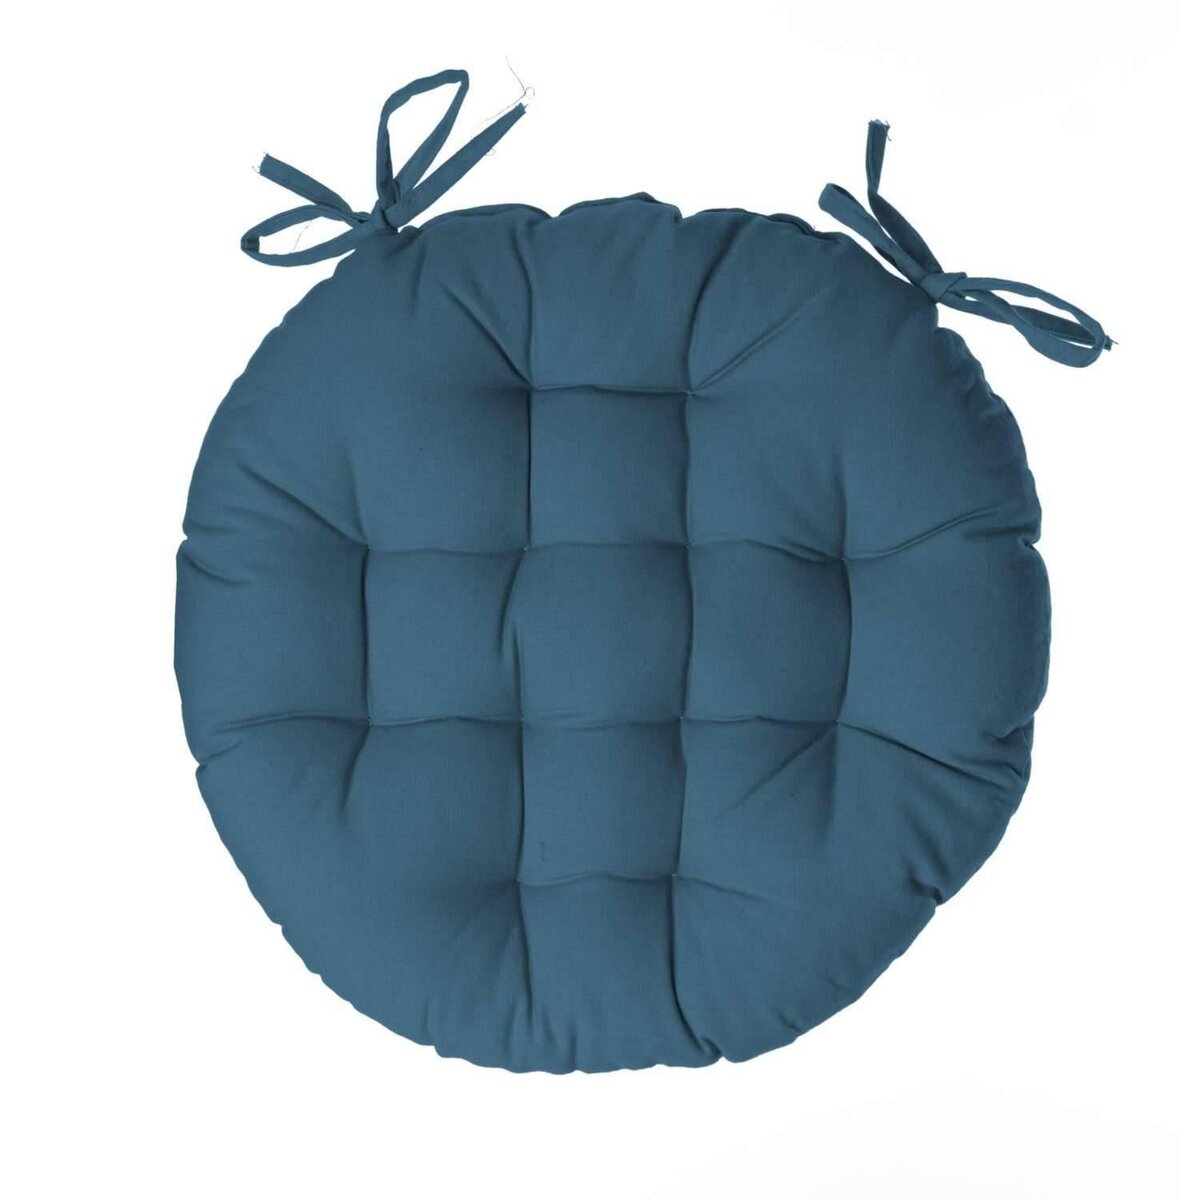 ATMOSPHERA Galette de chaise ronde Alix - Diam. 38 cm - Bleu